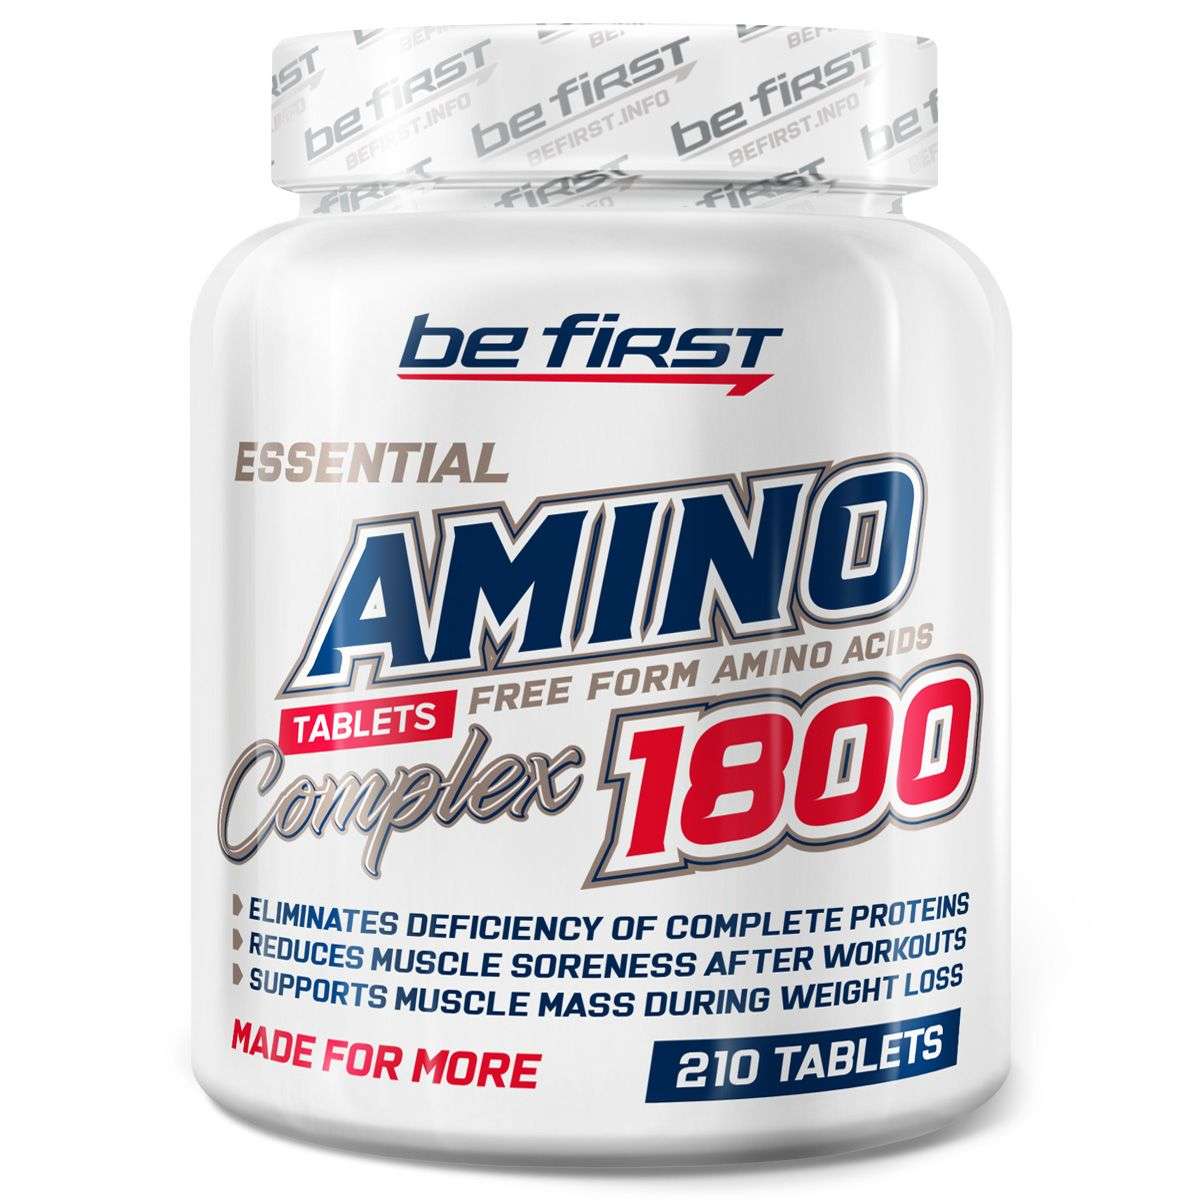 Аминокислотный комплекс Be First Amino 1800